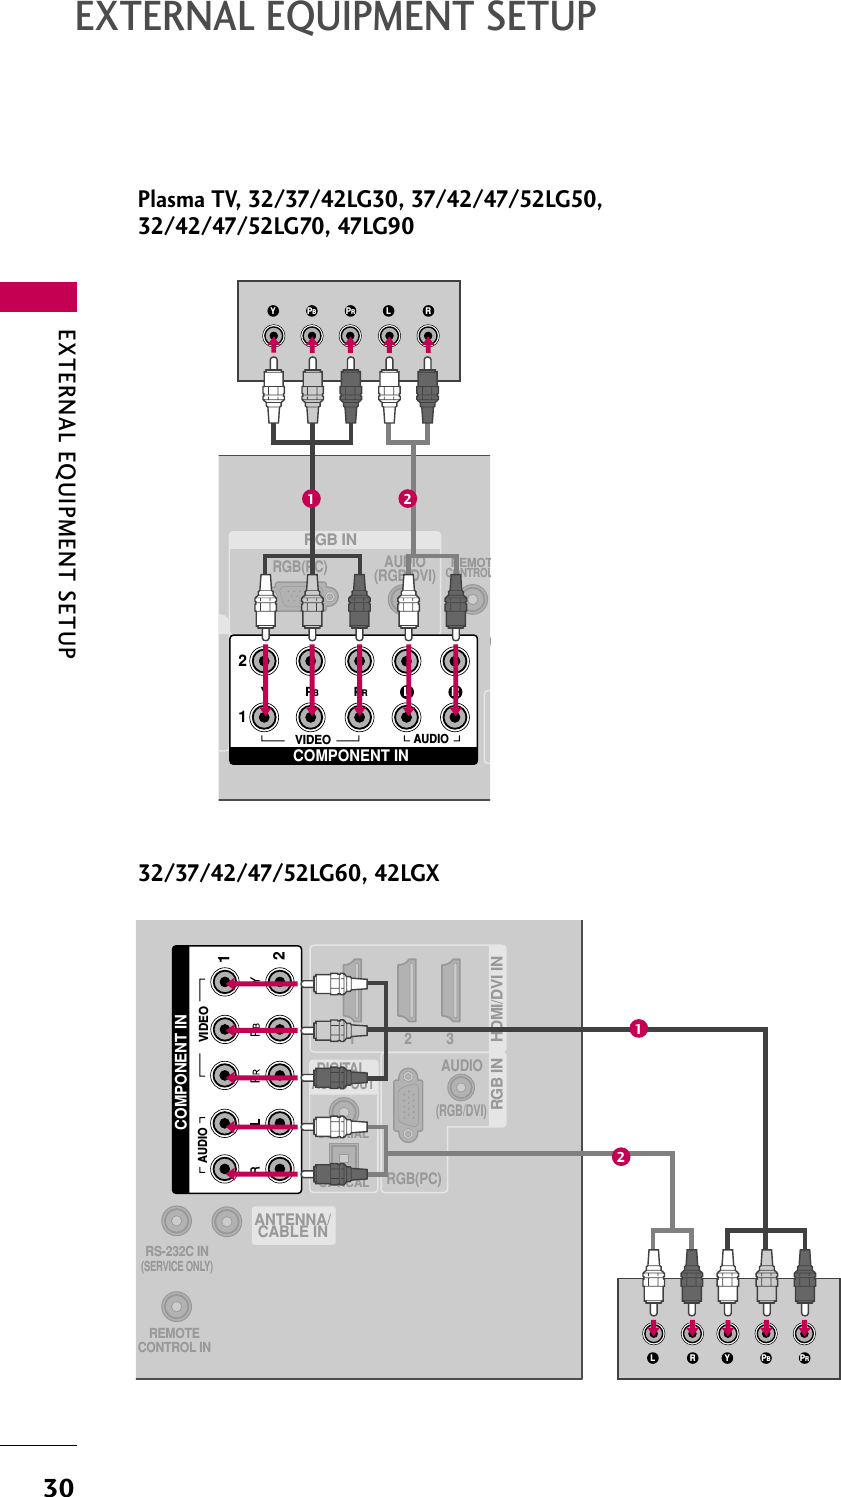 EXTERNAL EQUIPMENT SETUP30EXTERNAL EQUIPMENT SETUPRGB INAUDIO(RGB/DVI)RGB(PC)REMOTCONTROL(COMPONENT IN12VIDEOLYPBPRRAUDIOY L RPBPR1 2(RGB/DVI)AUDIORGB(PC)REMOTECONTROL INRS-232C IN(SERVICE ONLY)OPTICALCOAXIALDIGITAL AUDIO OUT1 2 3HDMI/DVI IN RGB IN ANTENNA/CABLE INCOMPONENT IN21VIDEOAUDIOYL R PBPR1232/37/42/47/52LG60, 42LGXPlasma TV, 32/37/42LG30, 37/42/47/52LG50,32/42/47/52LG70, 47LG90